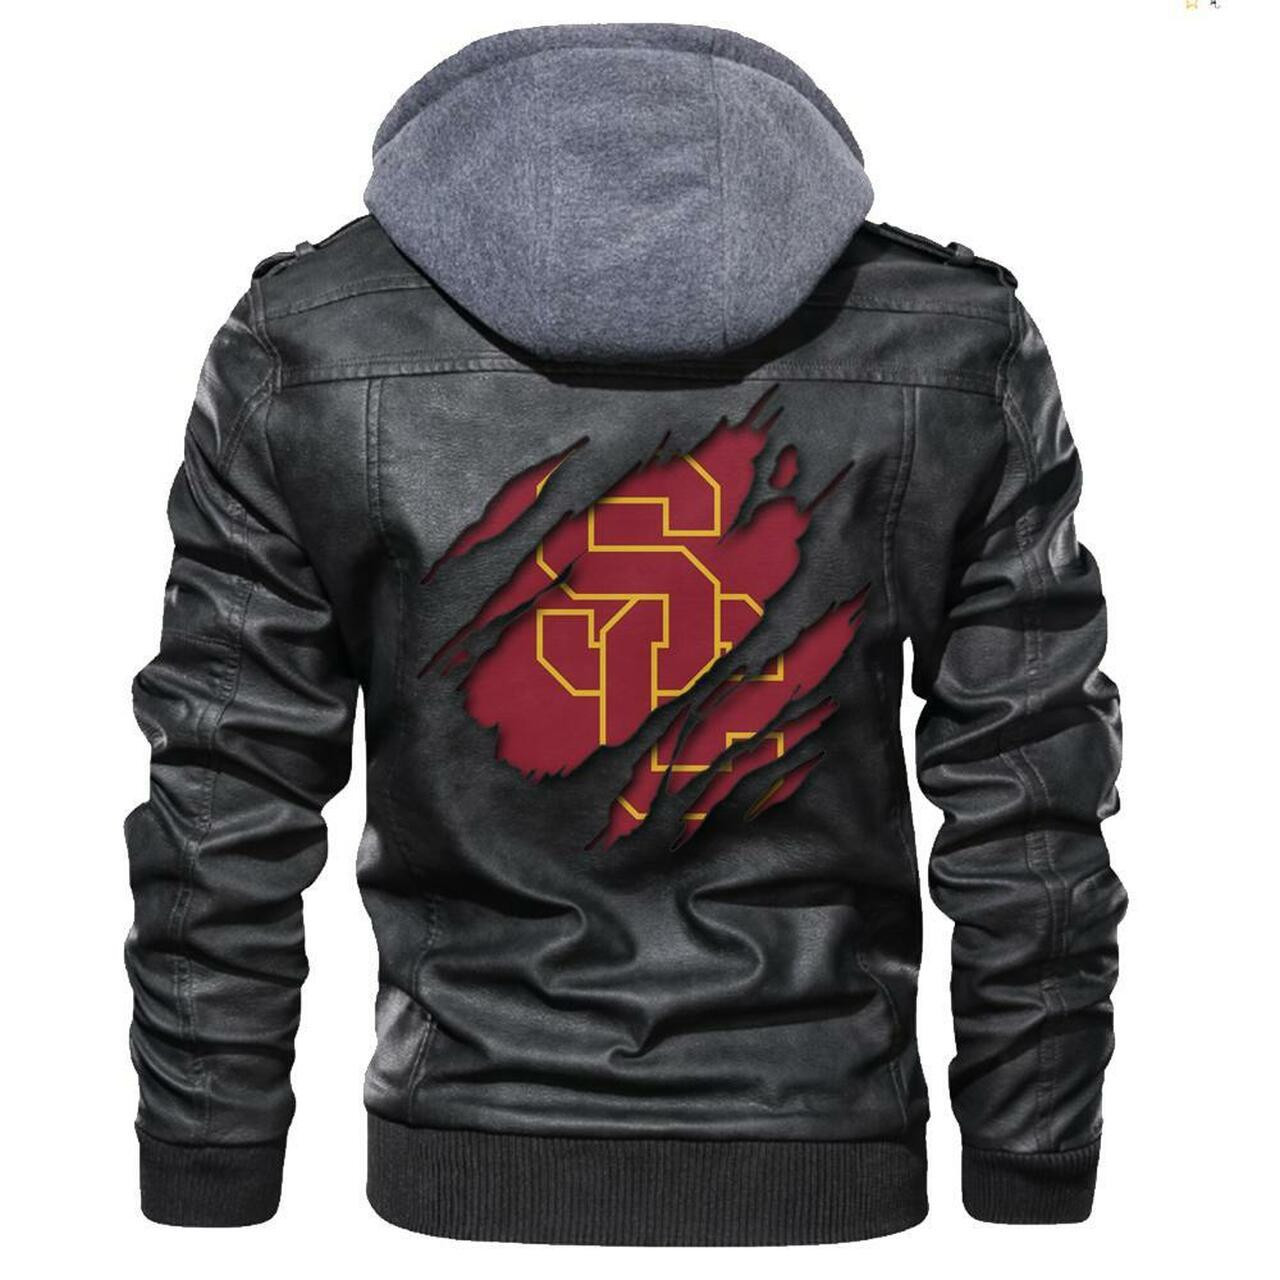 Top leather jacket Sells Best on Techcomshop 6